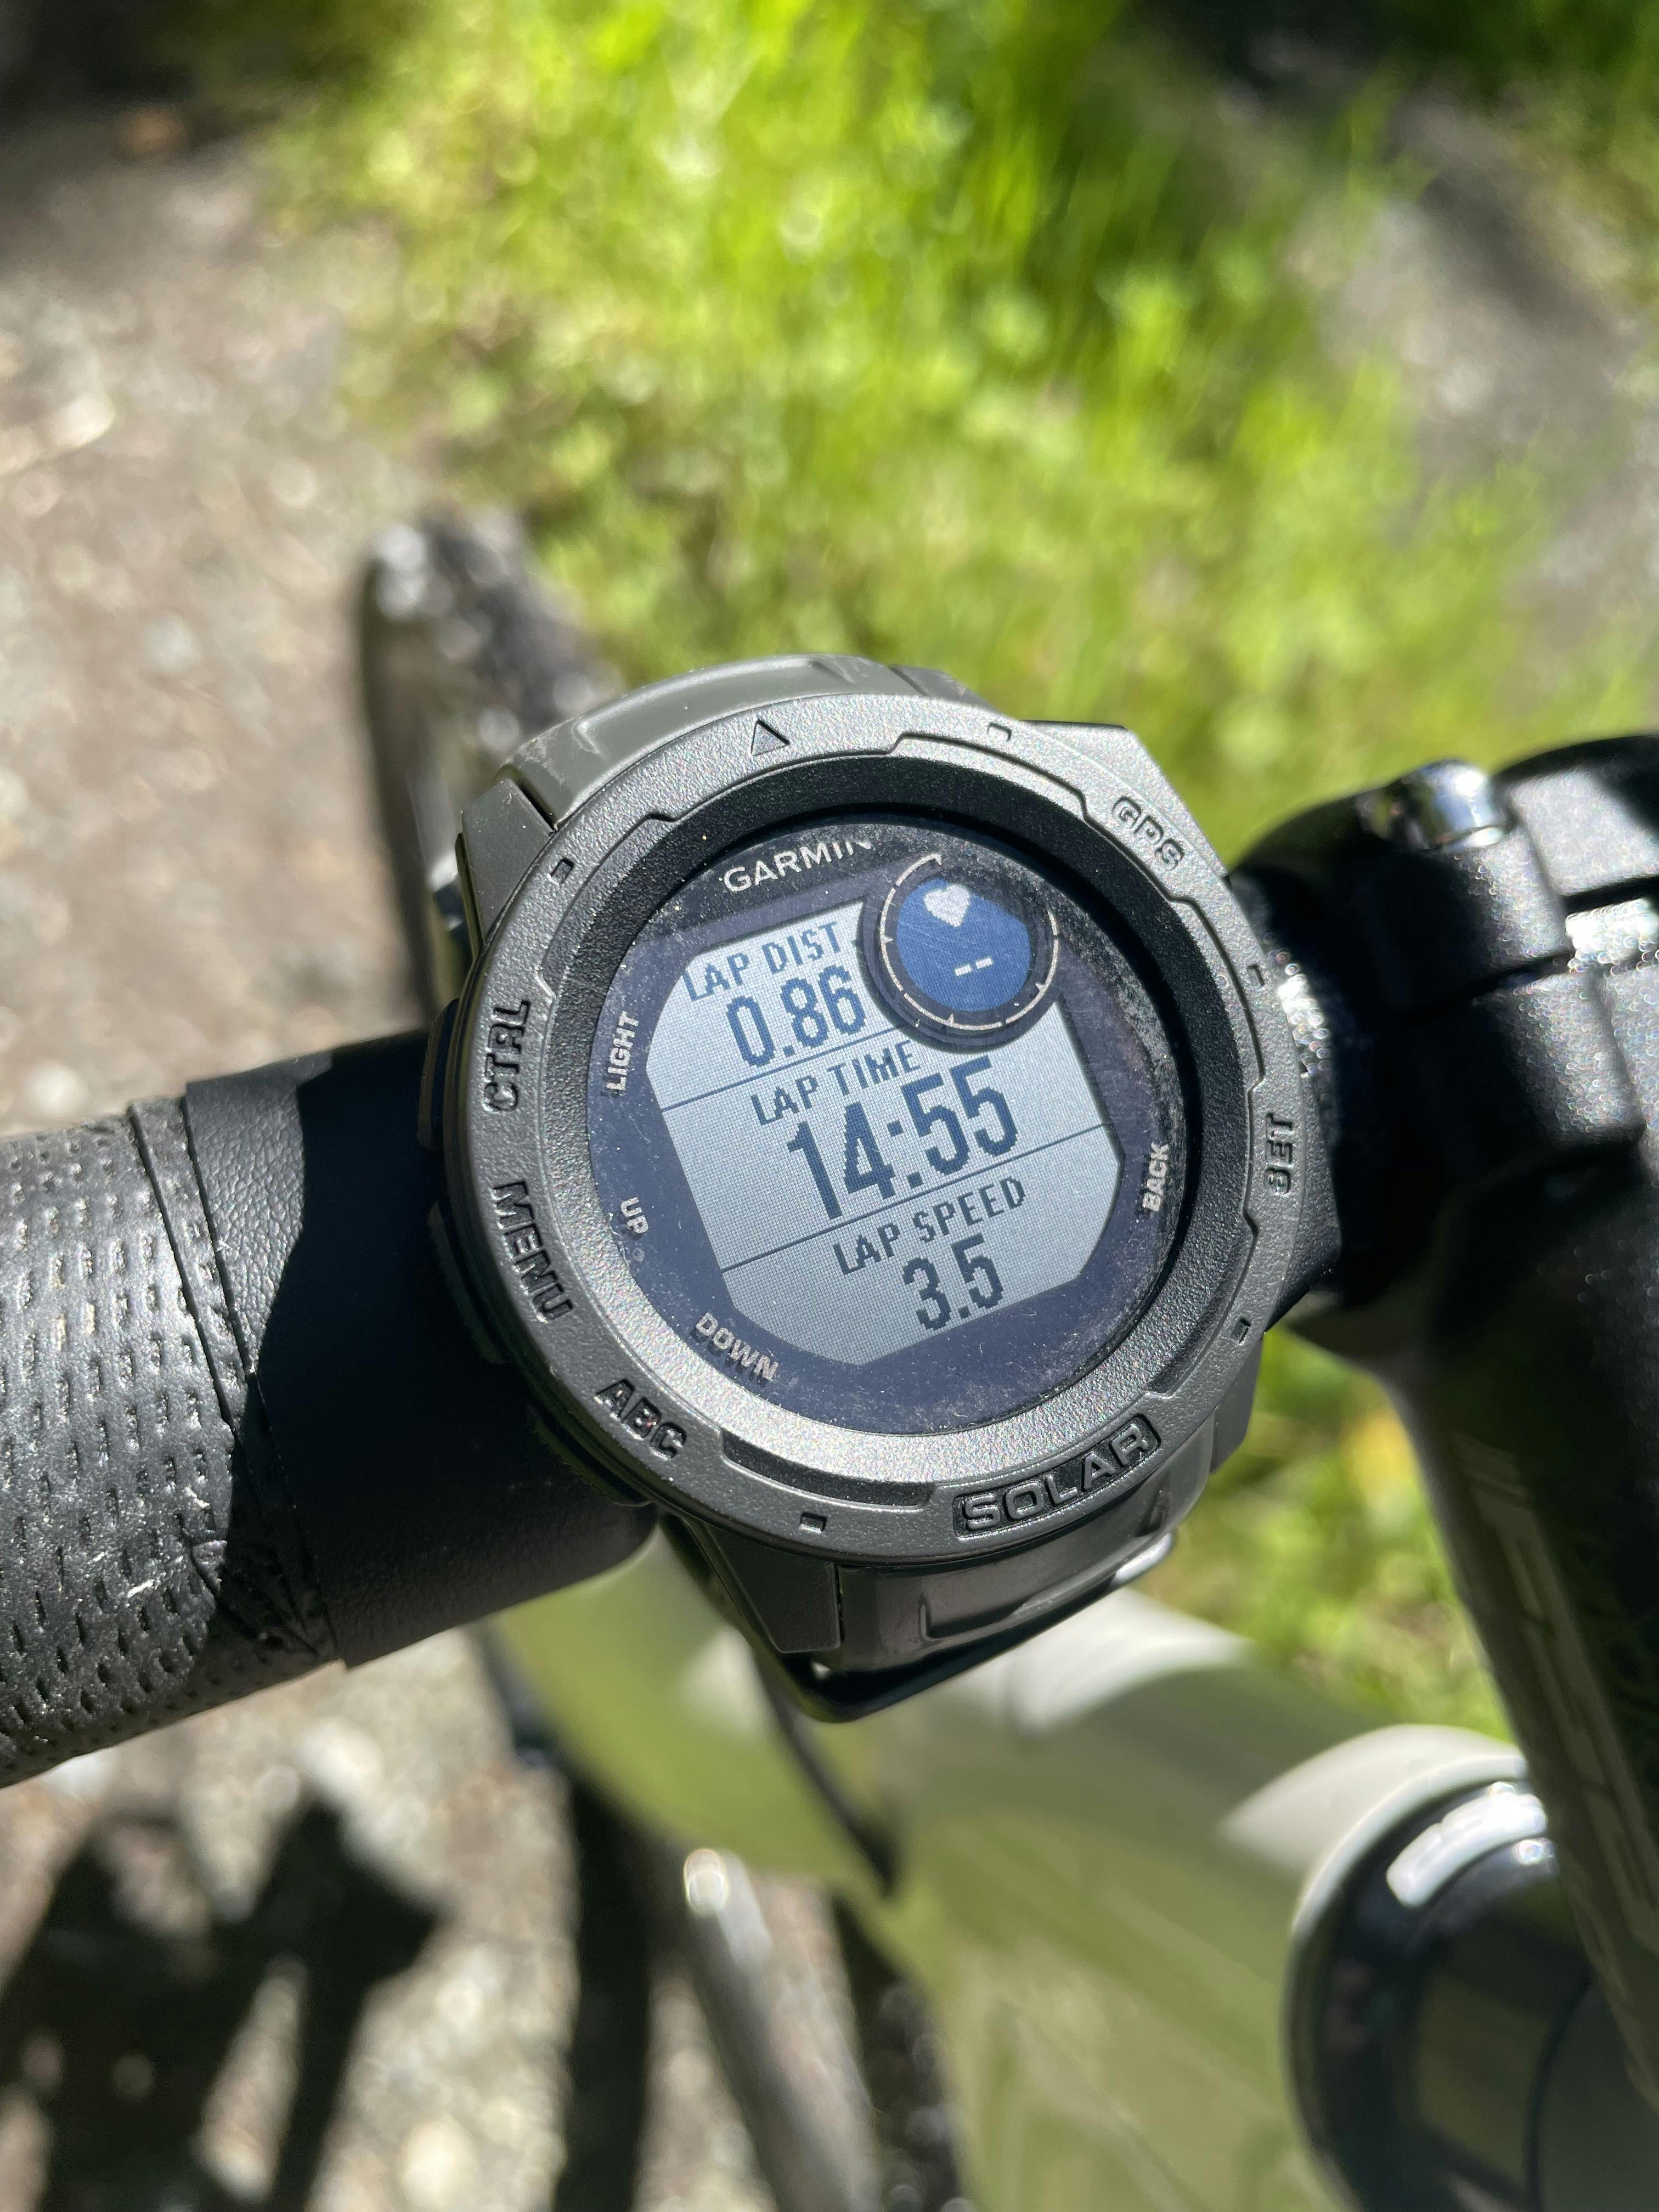 A Garmin watch attached to bike handlbars.